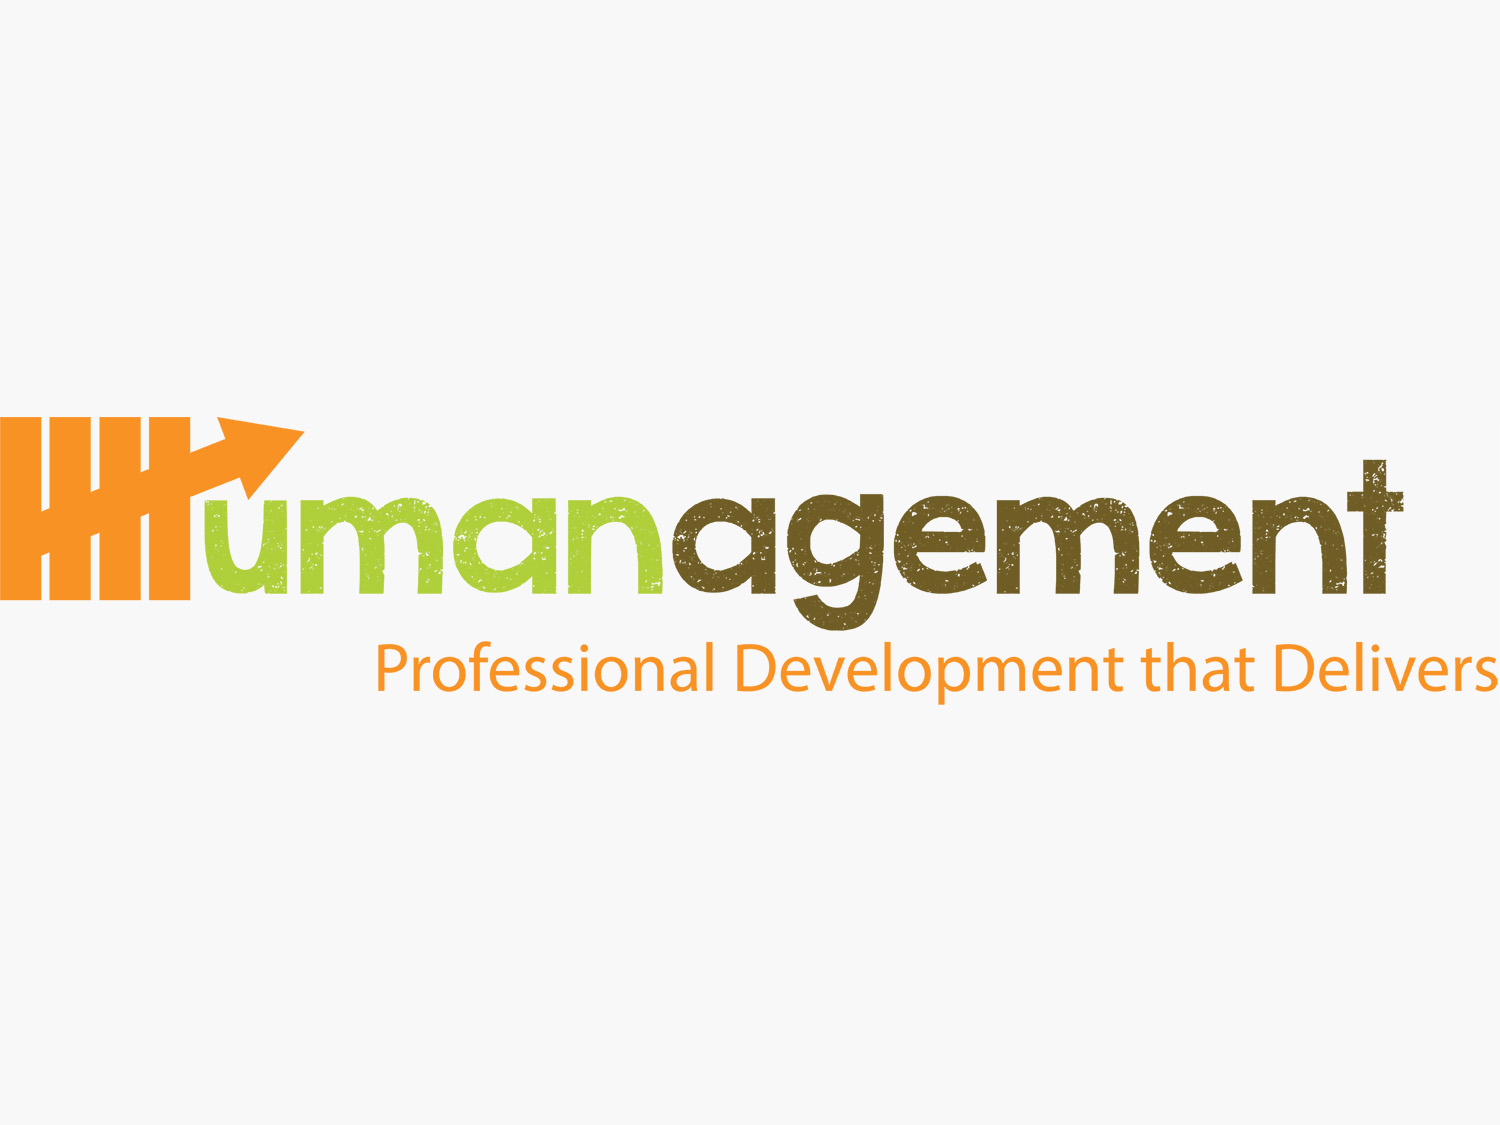 Humanagement previous logo